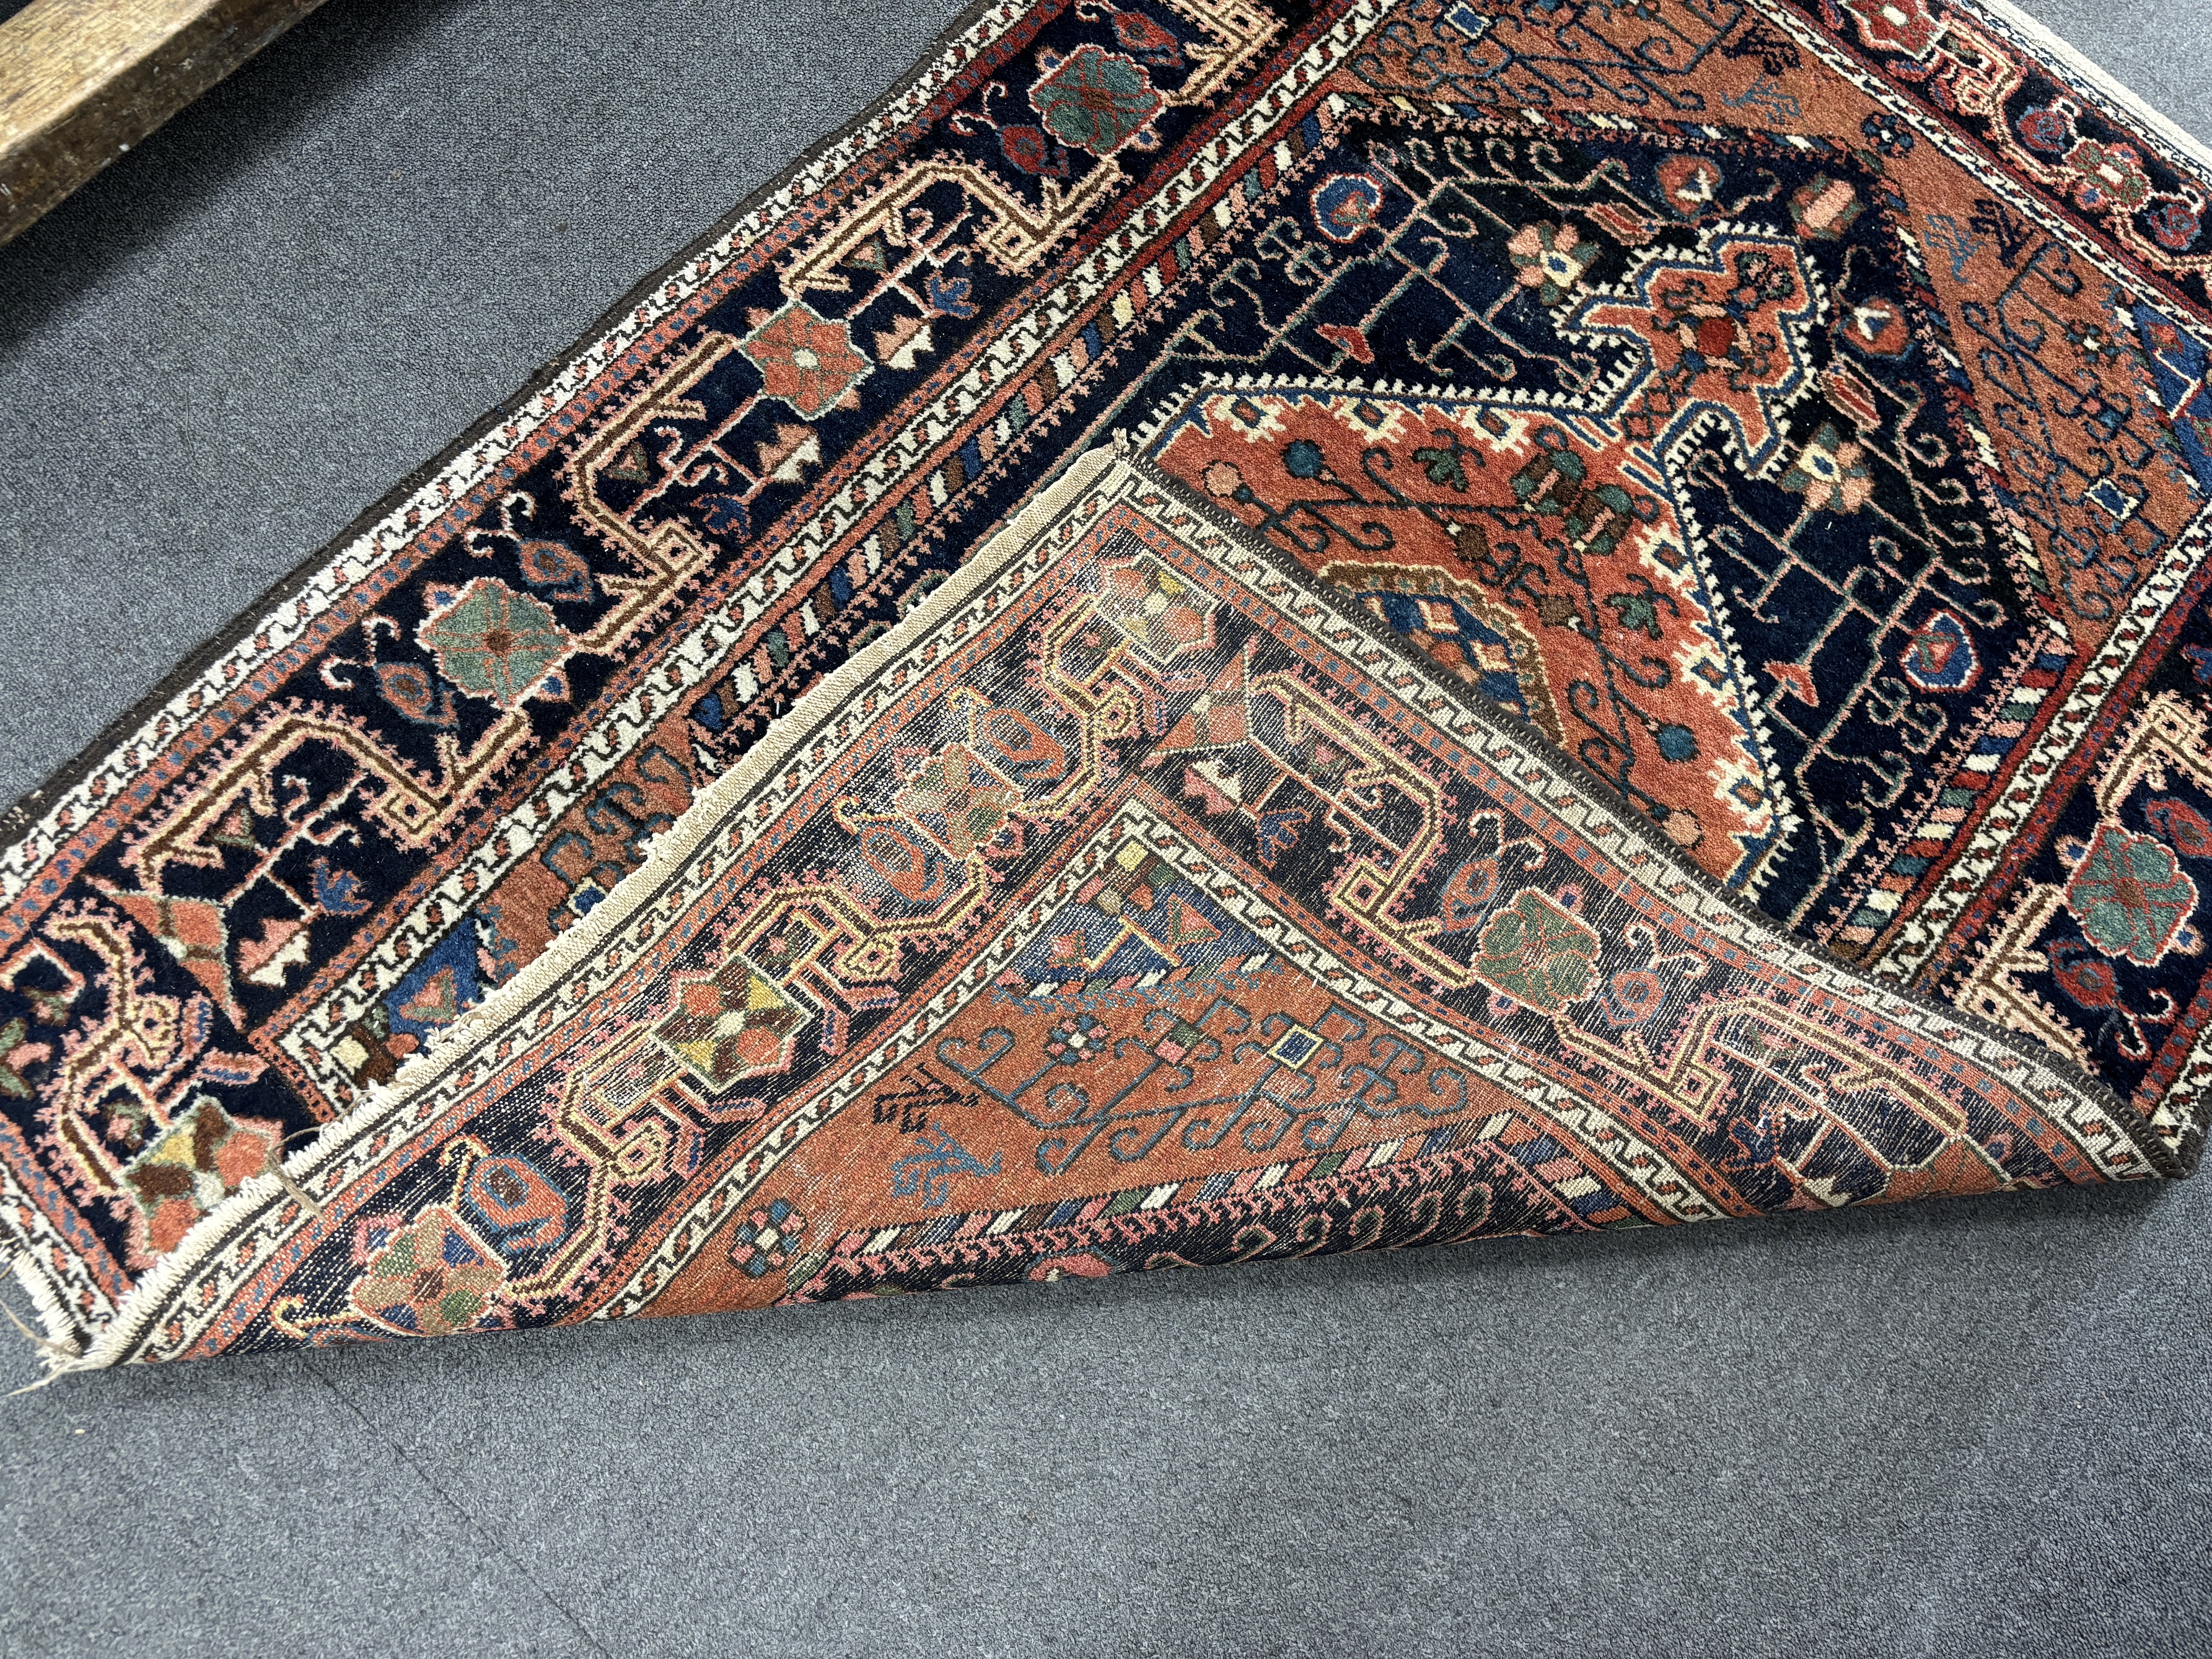 A Hamadan blue ground rug, 150 x 112cm - Image 2 of 2